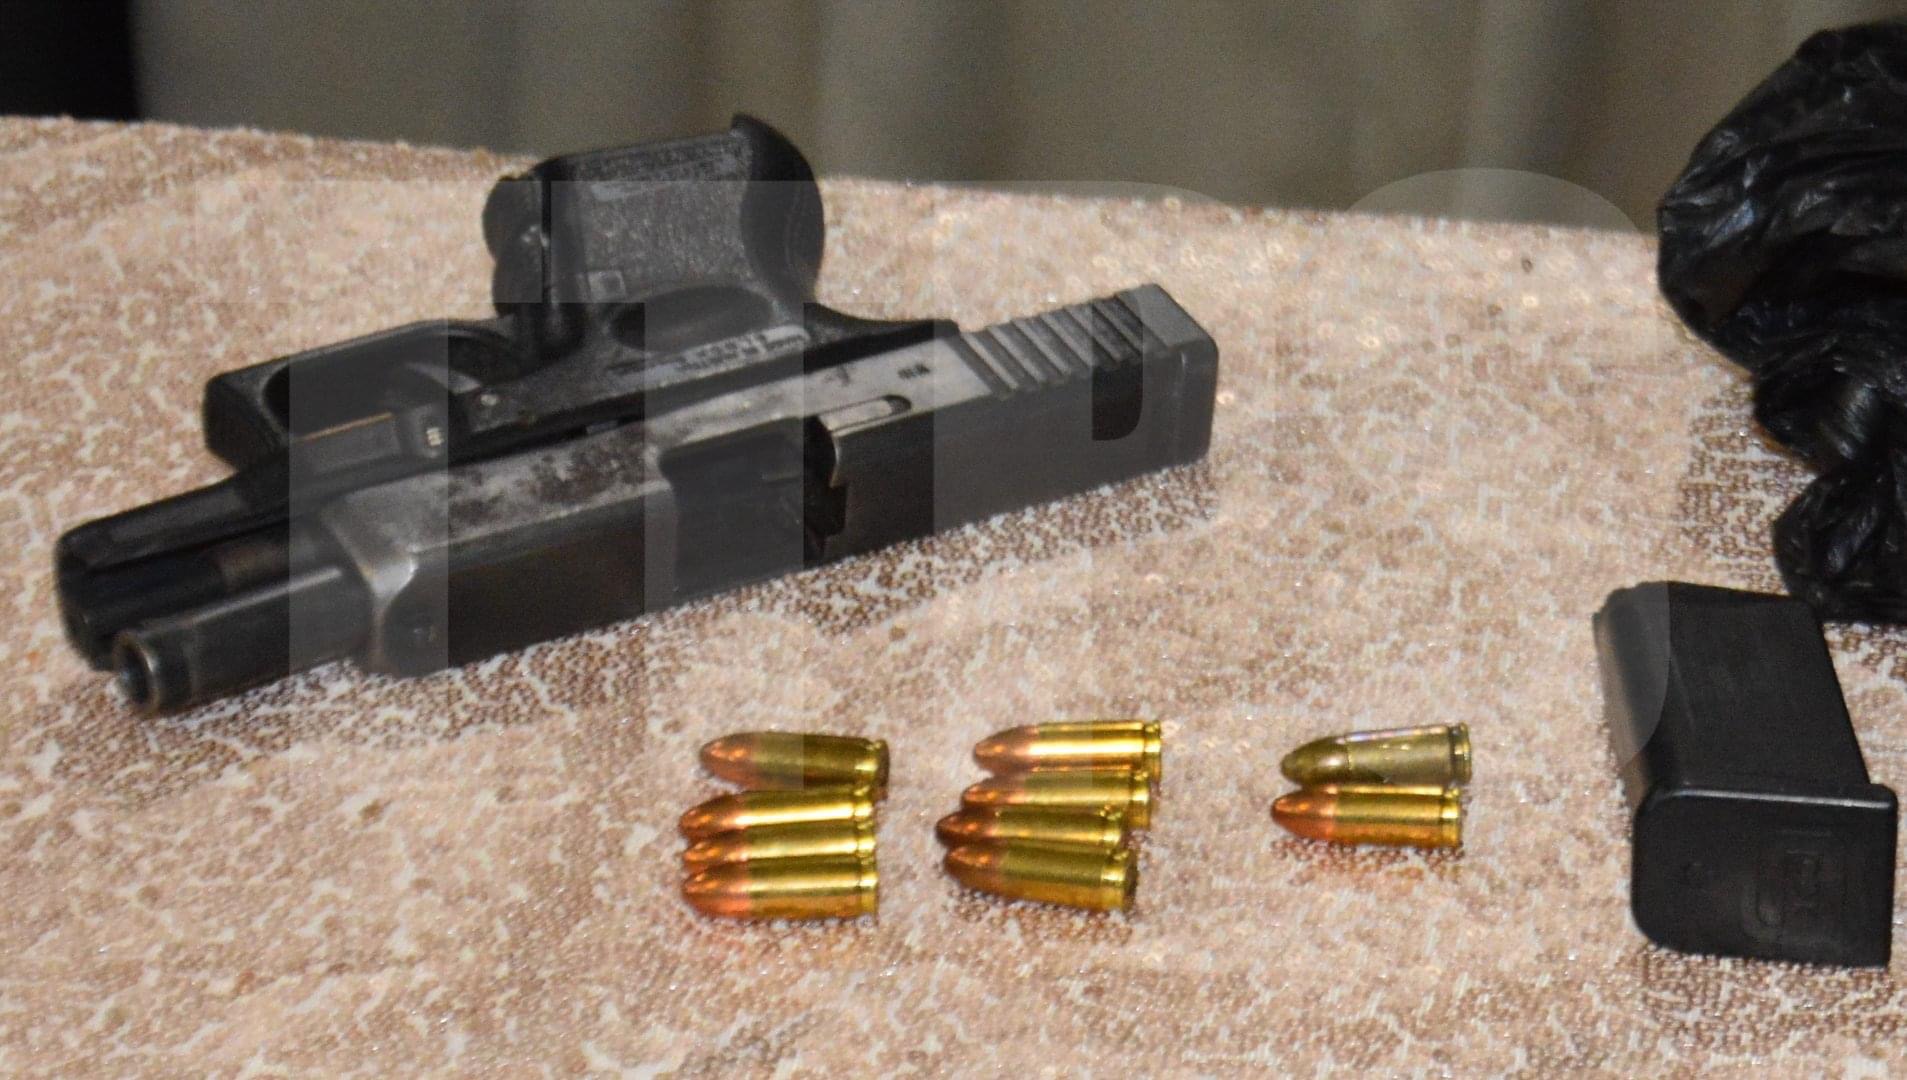 Gun and ammo seized in Roxborough